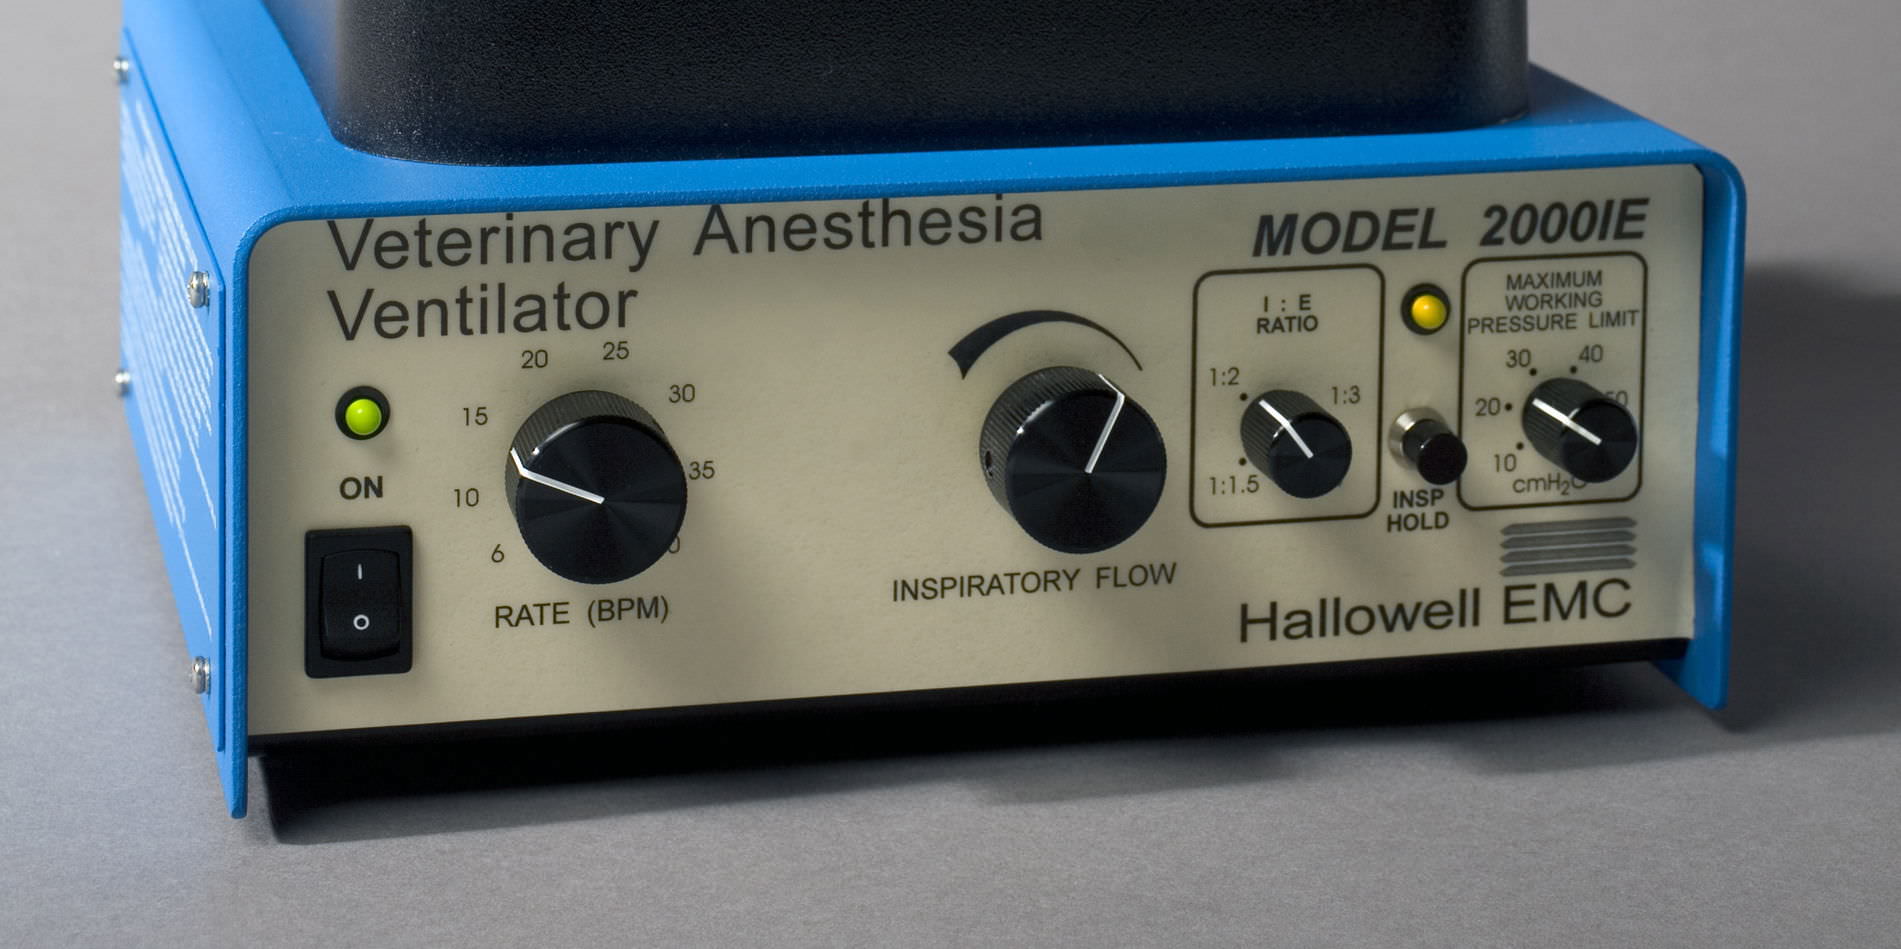 Anesthesia ventilator / veterinary Model 2000IE Hallowell EMC